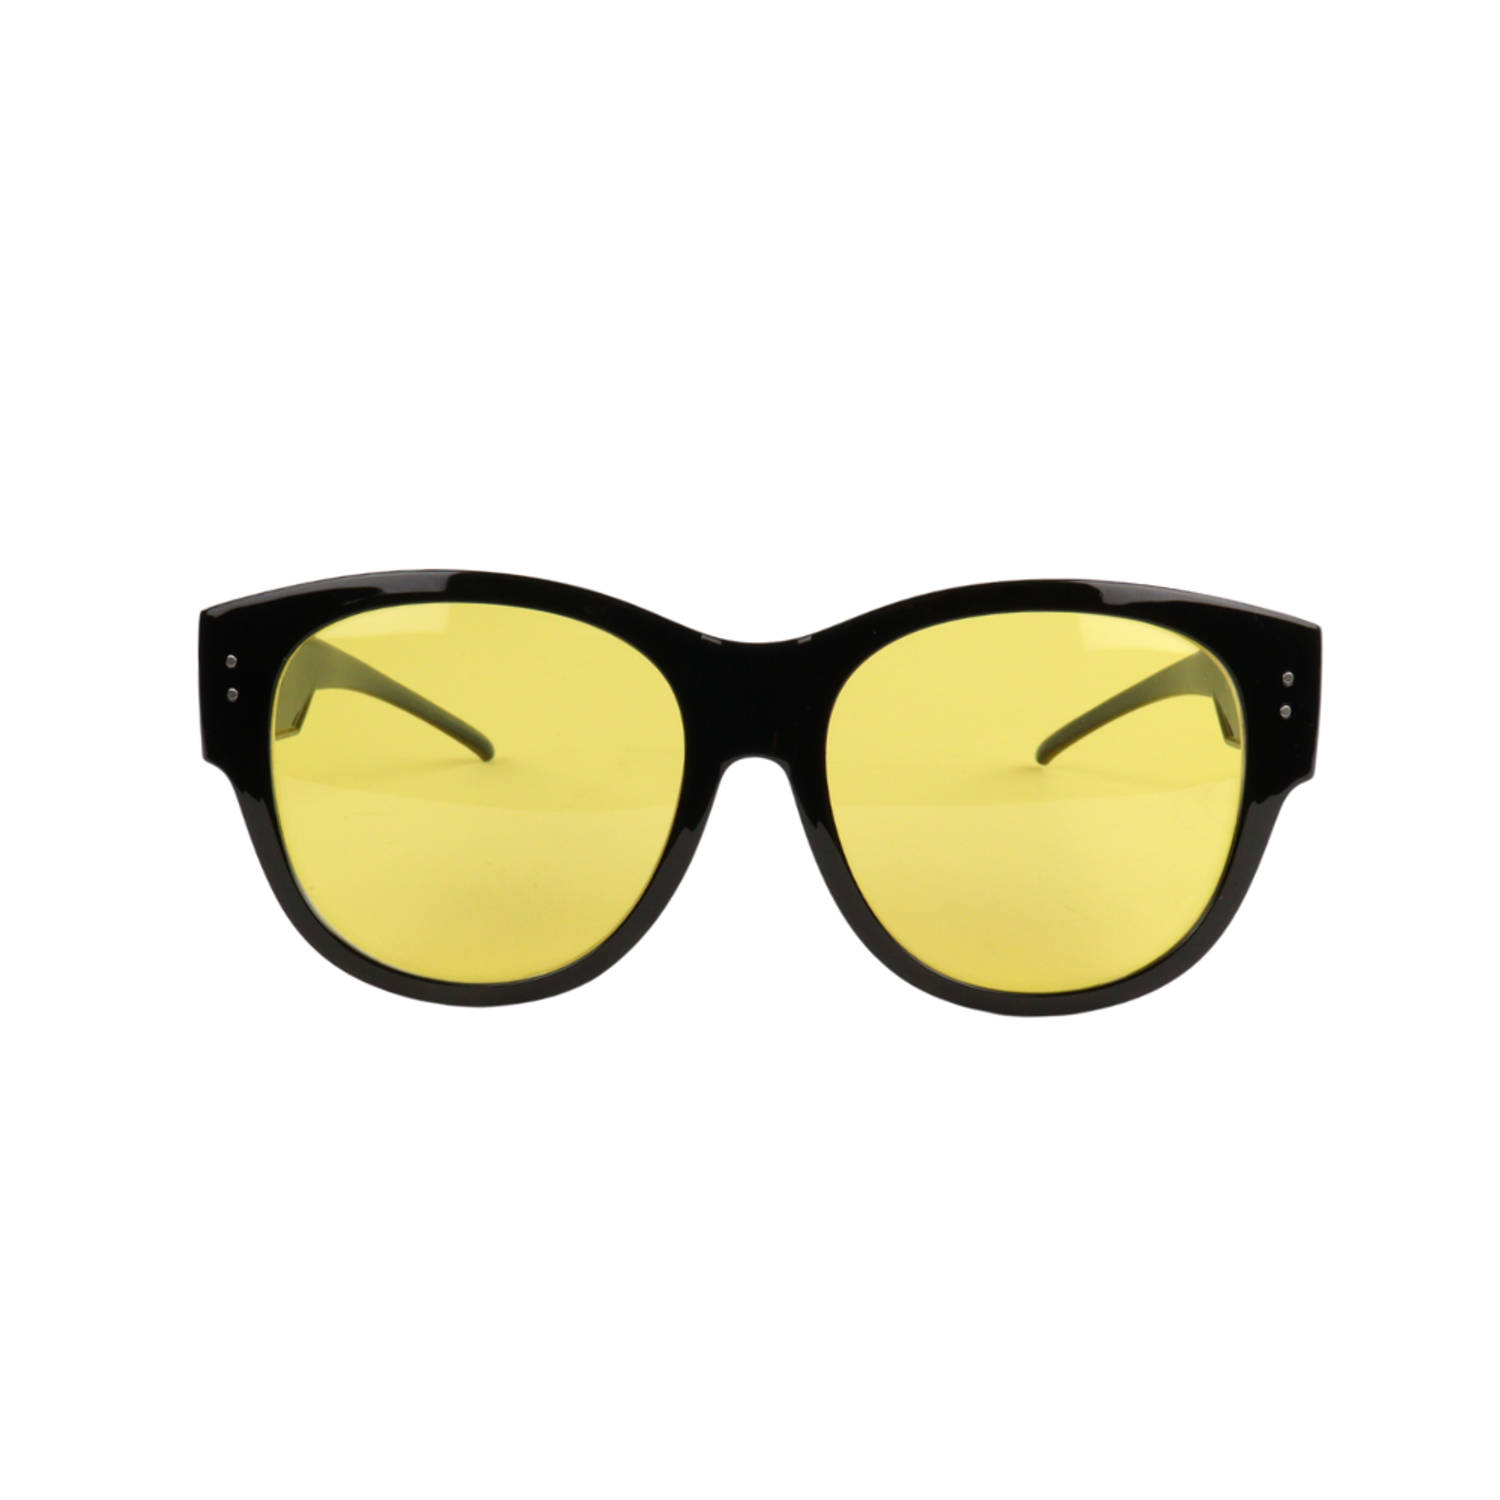 elektrode Onweersbui leer Montour Nachtbril Overzetbril - Jules - Ovaal Model - Zwart - Dames |  Blokker